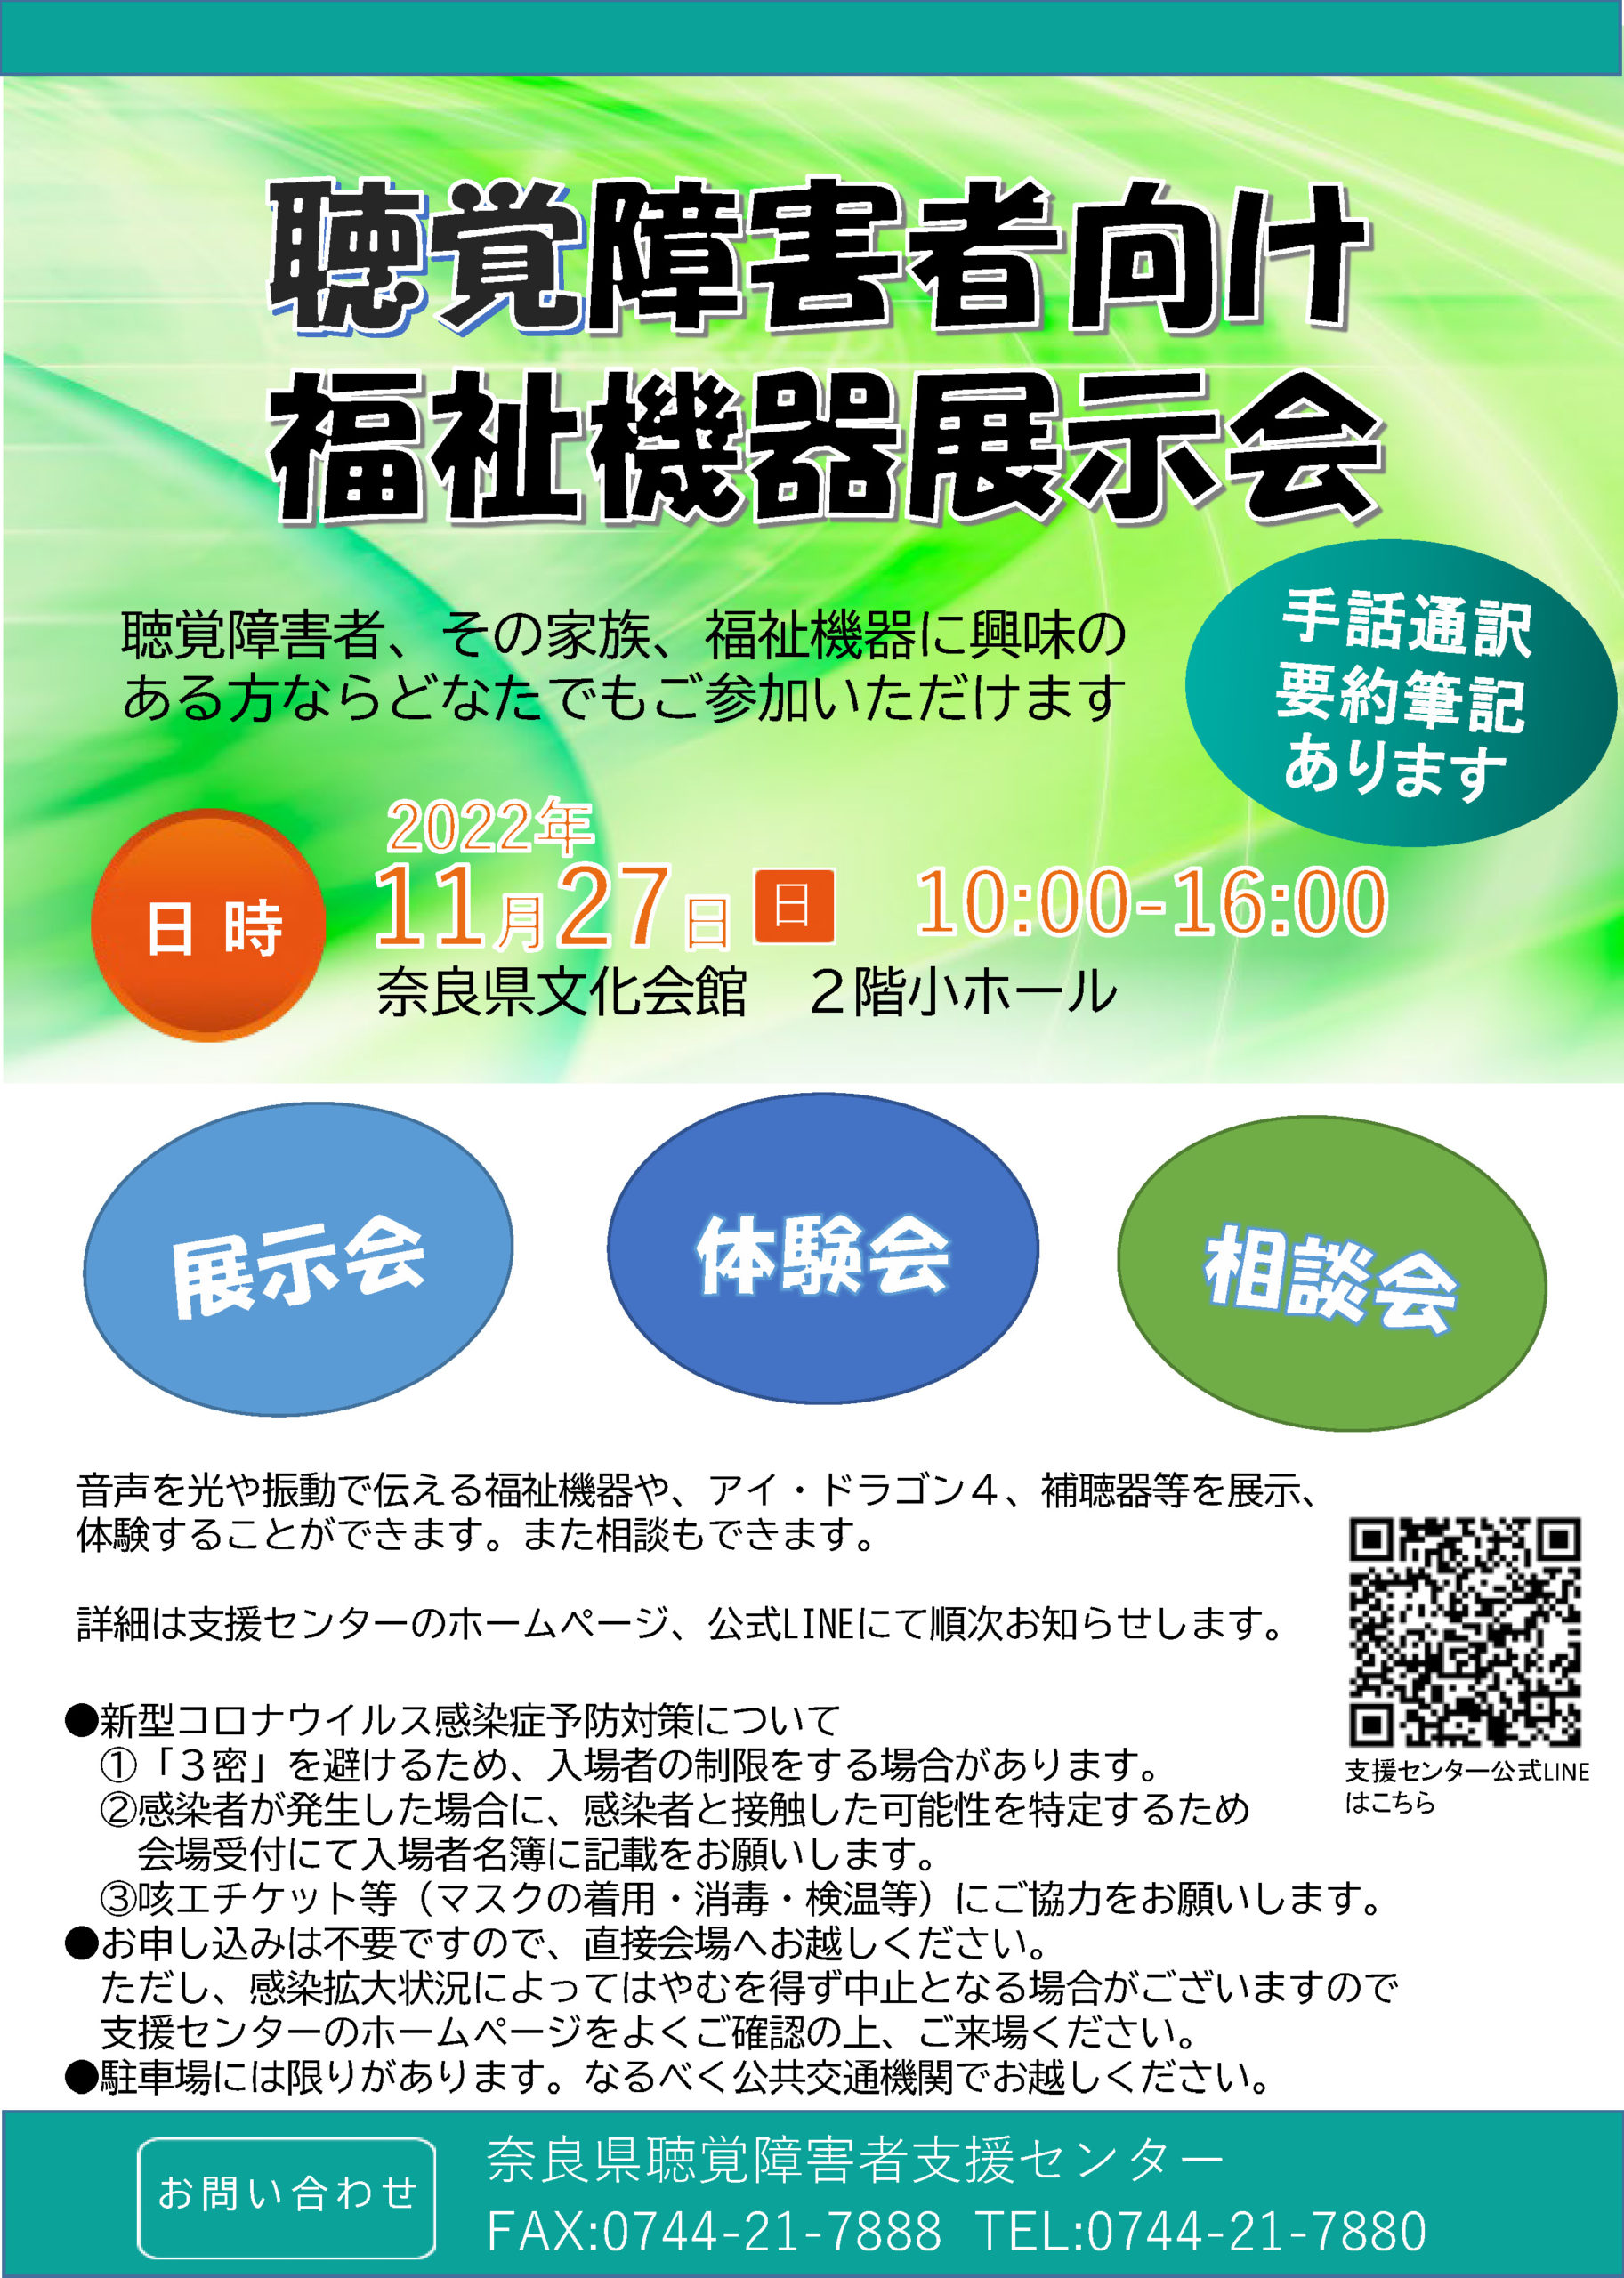 聴覚障害者向け福祉機器展示会2022 | 奈良県聴覚障害者支援センター